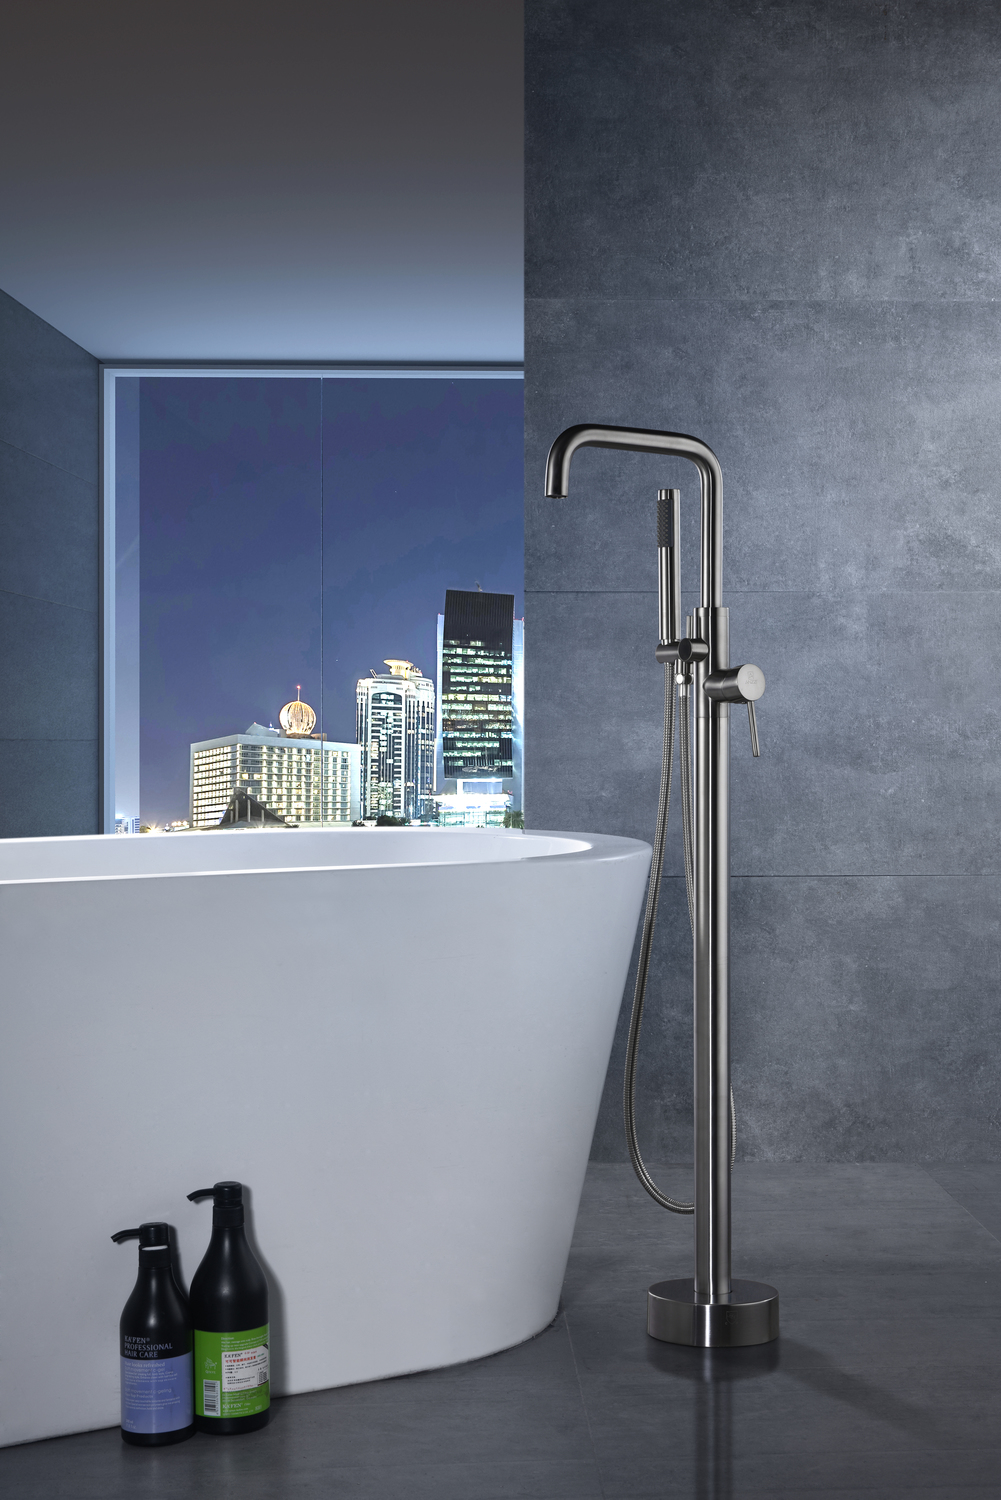 rubbed oil bronze shower fixtures Anzzi BATHROOM - Faucets - Bathtub Faucets - Freestanding Nickel